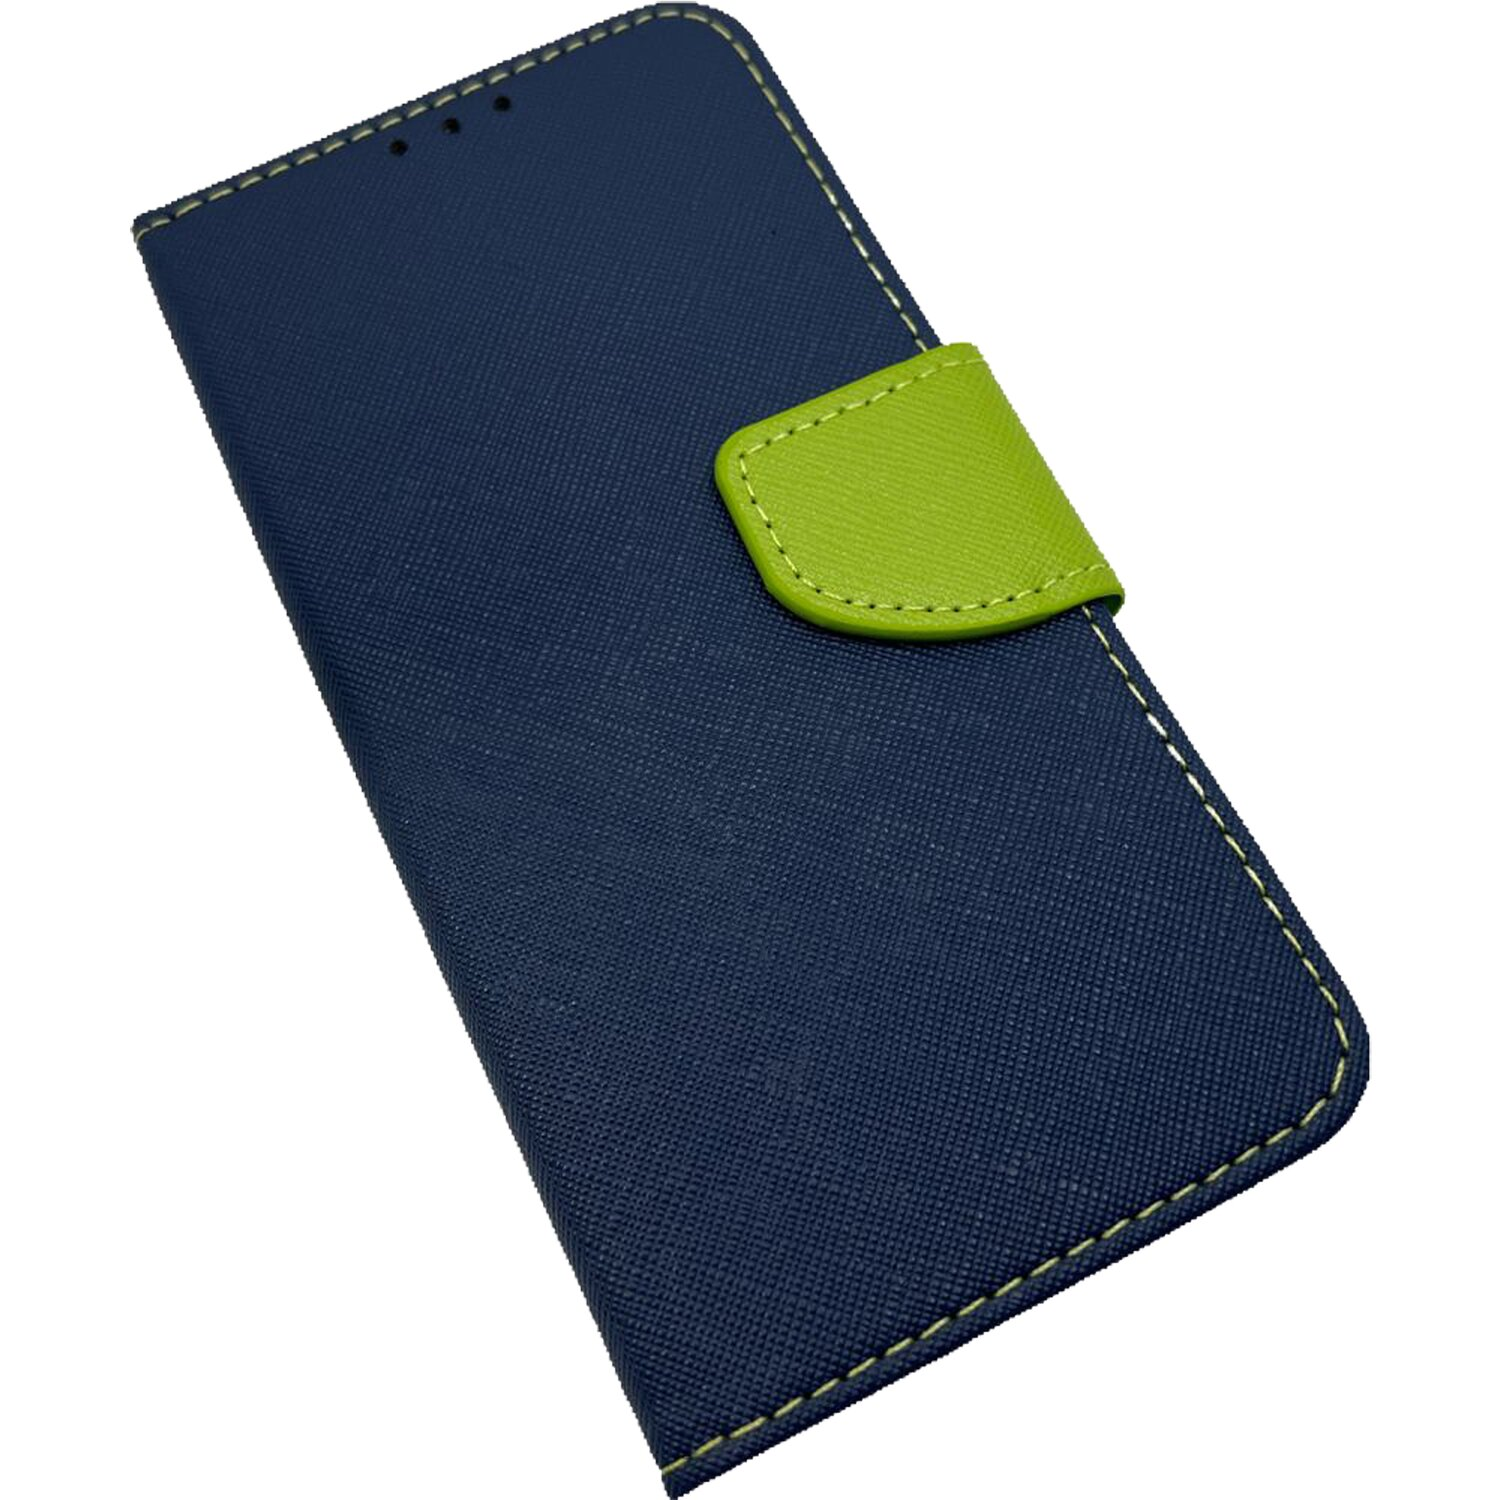 5 Tasche, Xcover Edition), Buch COFI EE (Enterprise Bookcover, Blau-Grün Samsung, Galaxy